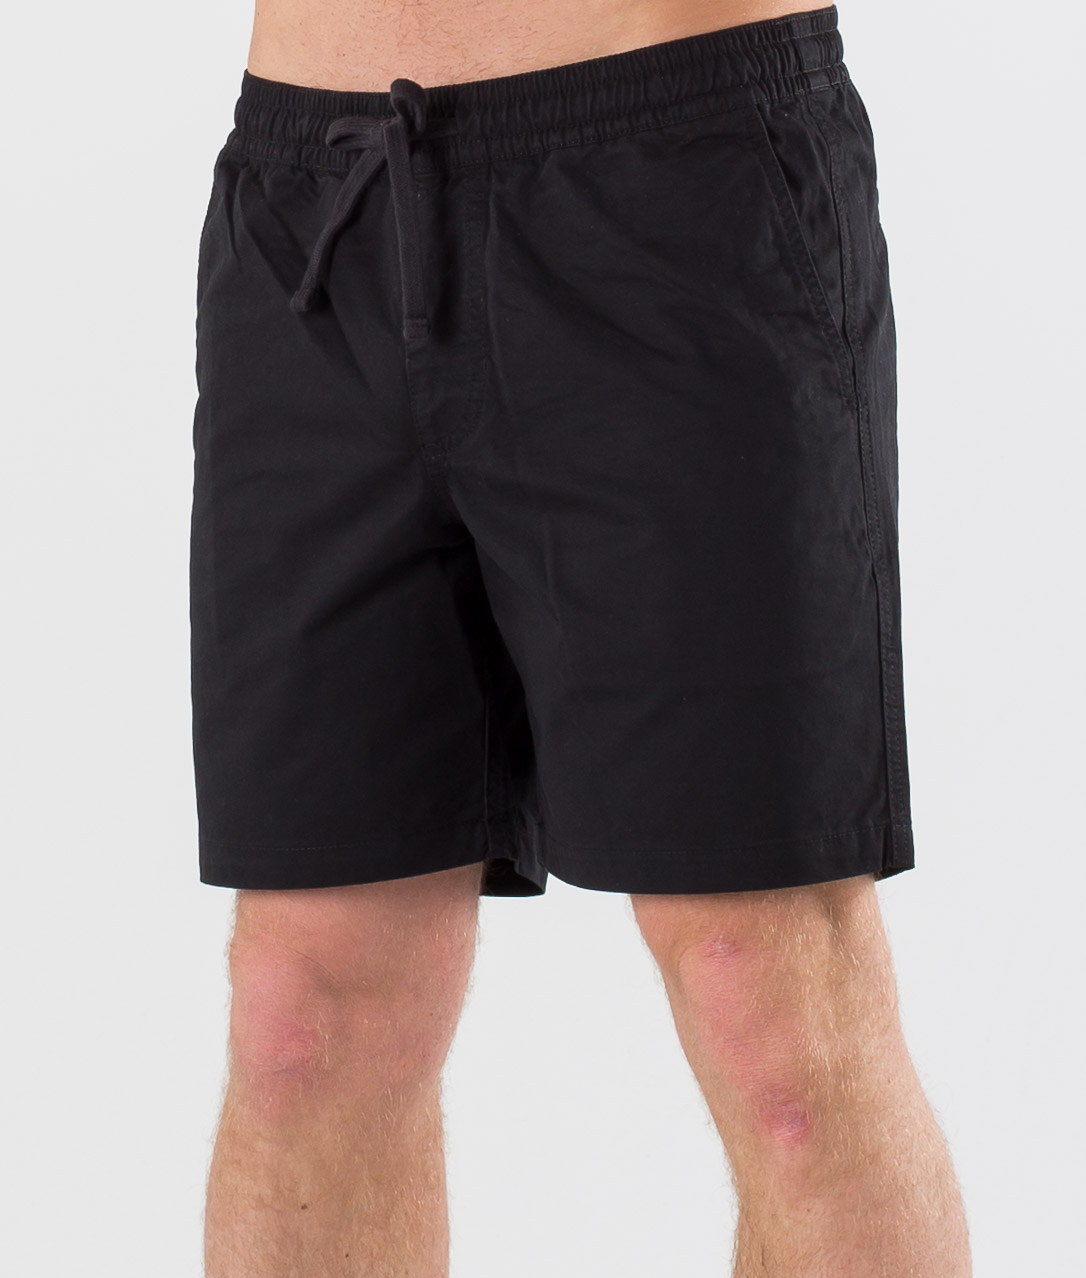 vans drawstring shorts